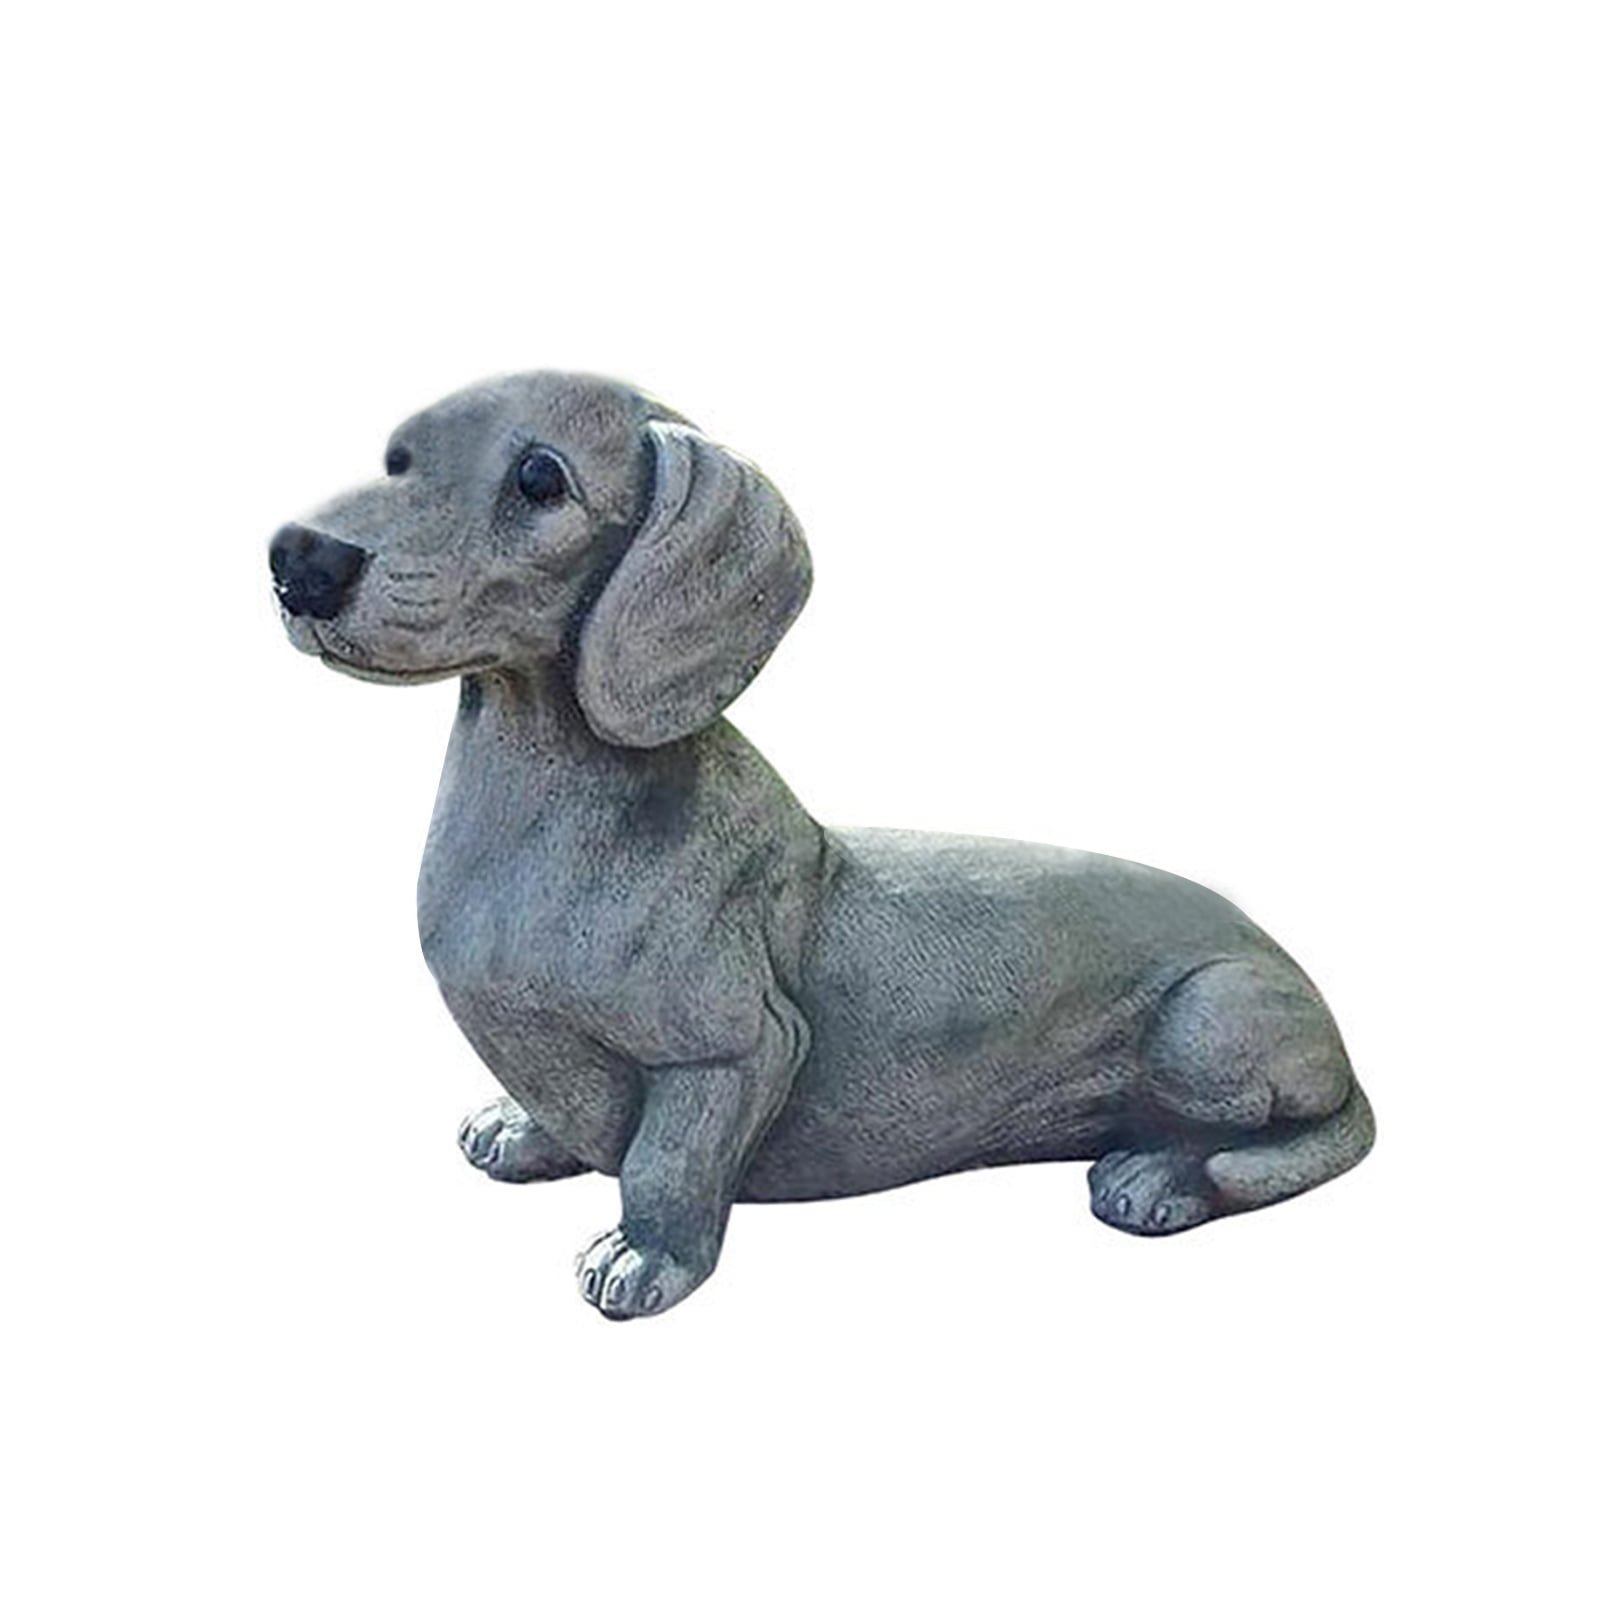 Daschund Dog Puppy Figurine Statue Miniature Small Wood Carving Home Decor Small 